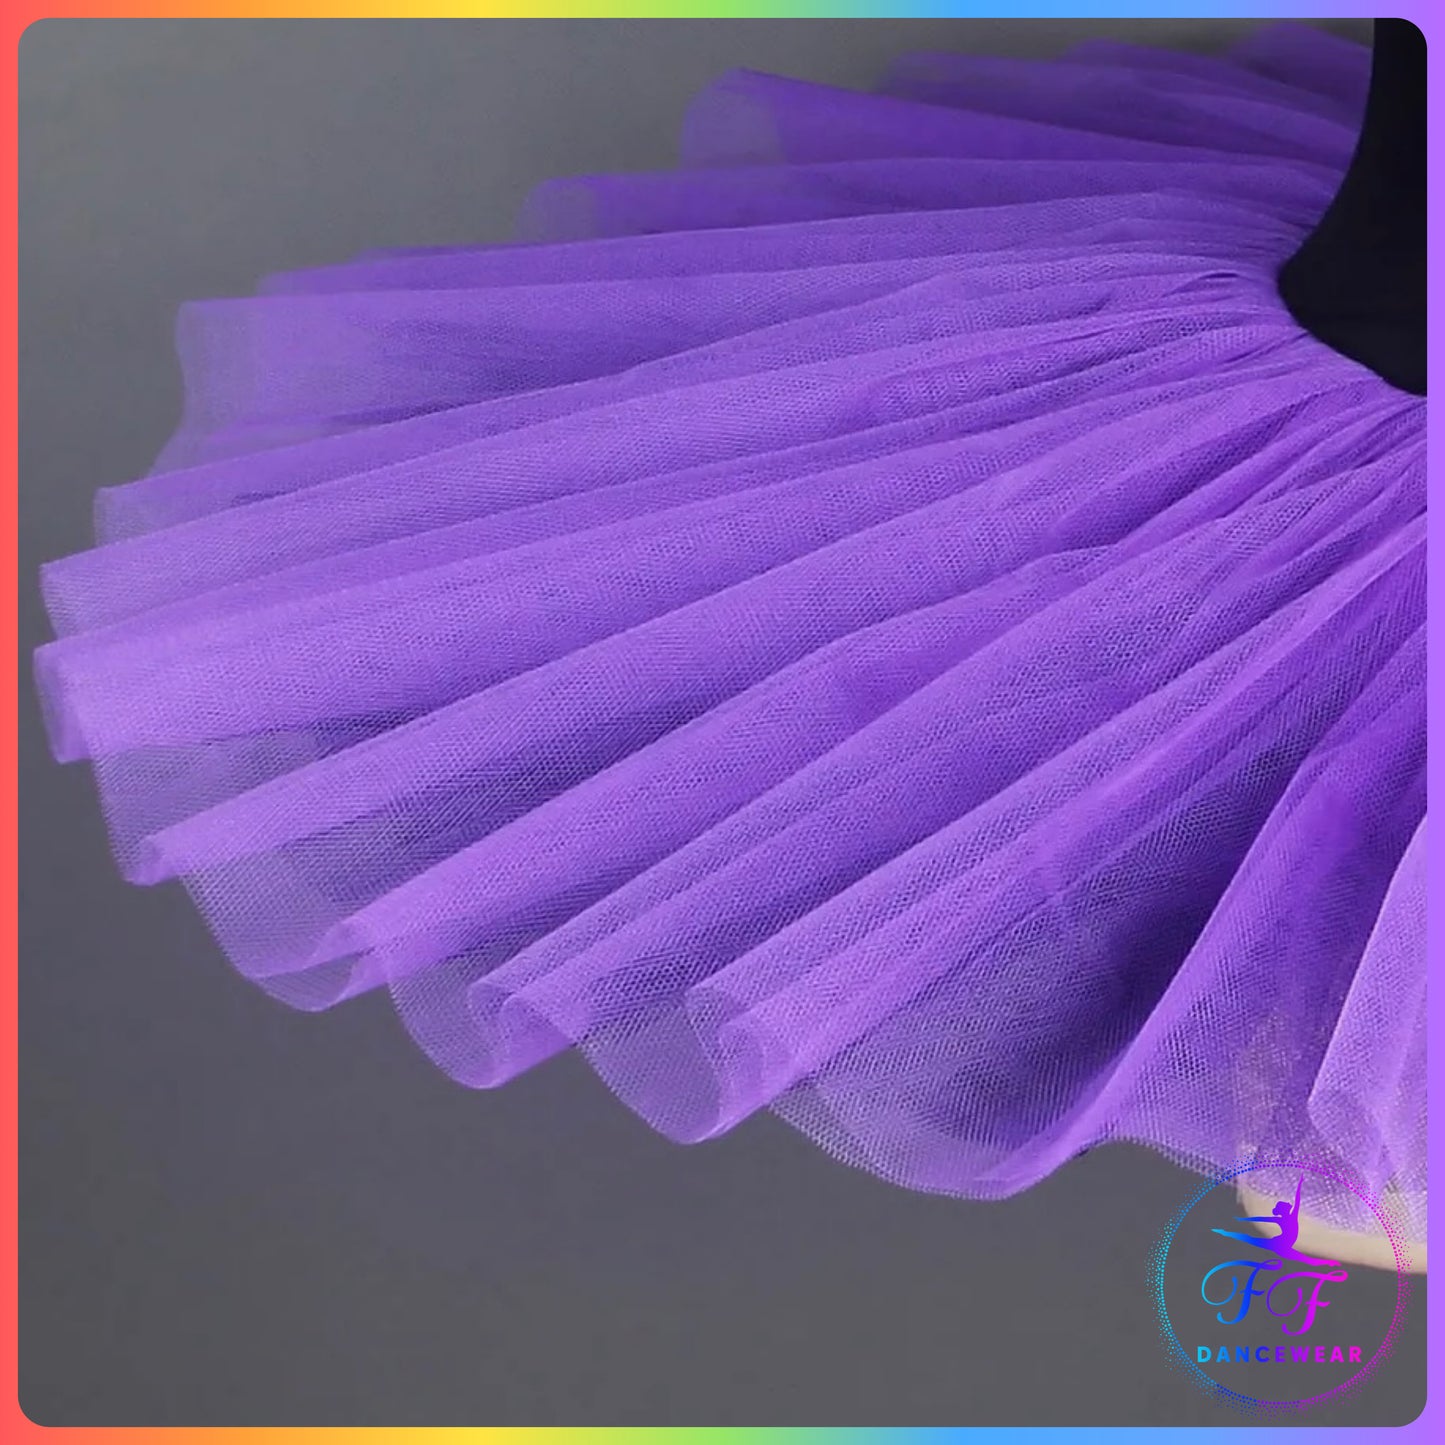 Black Velvet & Purple Stretch Pancake Ballet Tutu